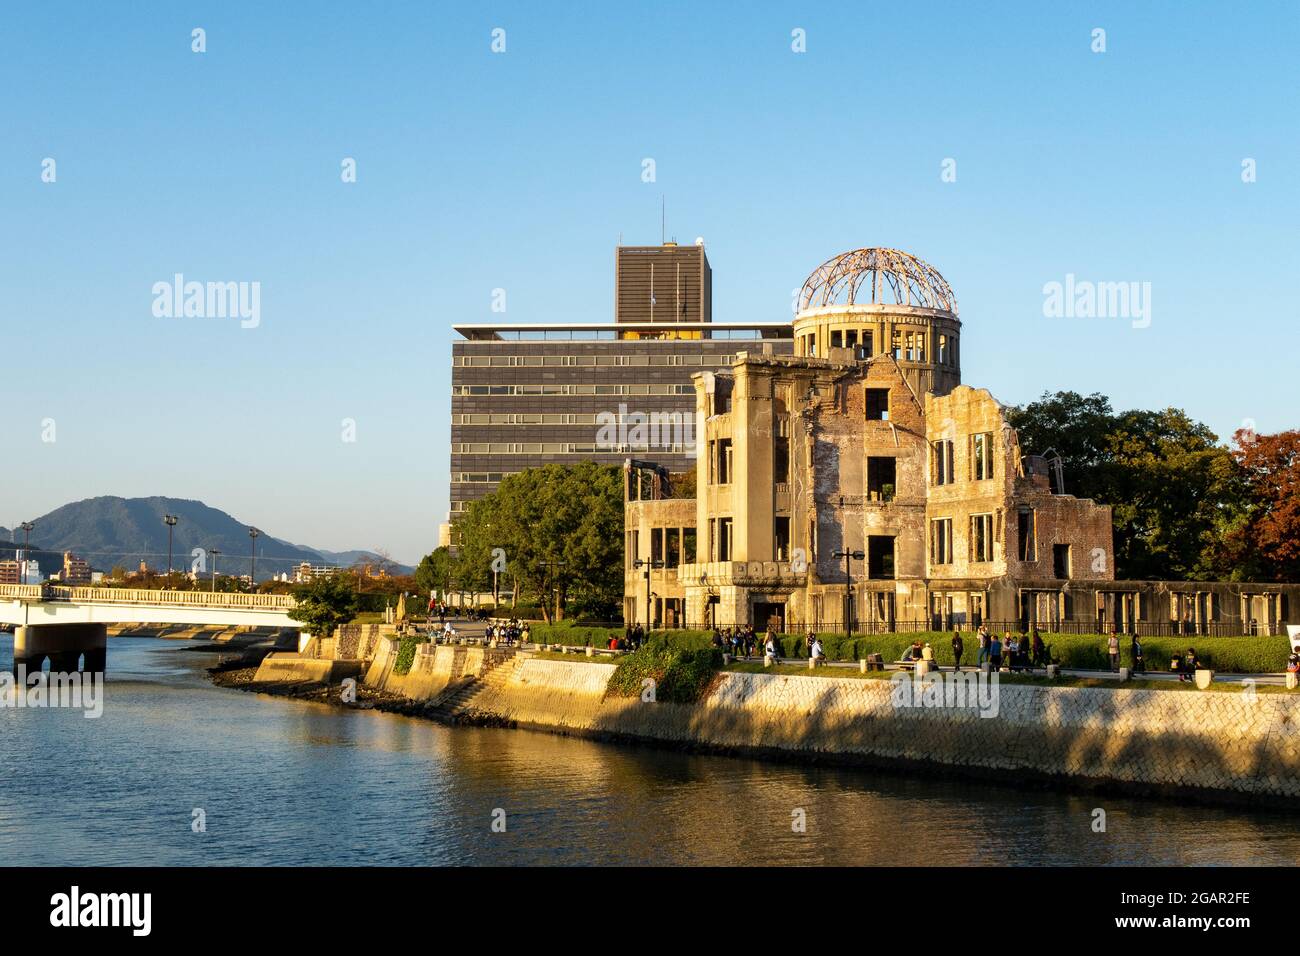 Hiroshima Peace Memorial (Atomic Bomb Dome, Genbaku Dome) building, which survived atomic bombing in Hiroshima, Japan. Stock Photo